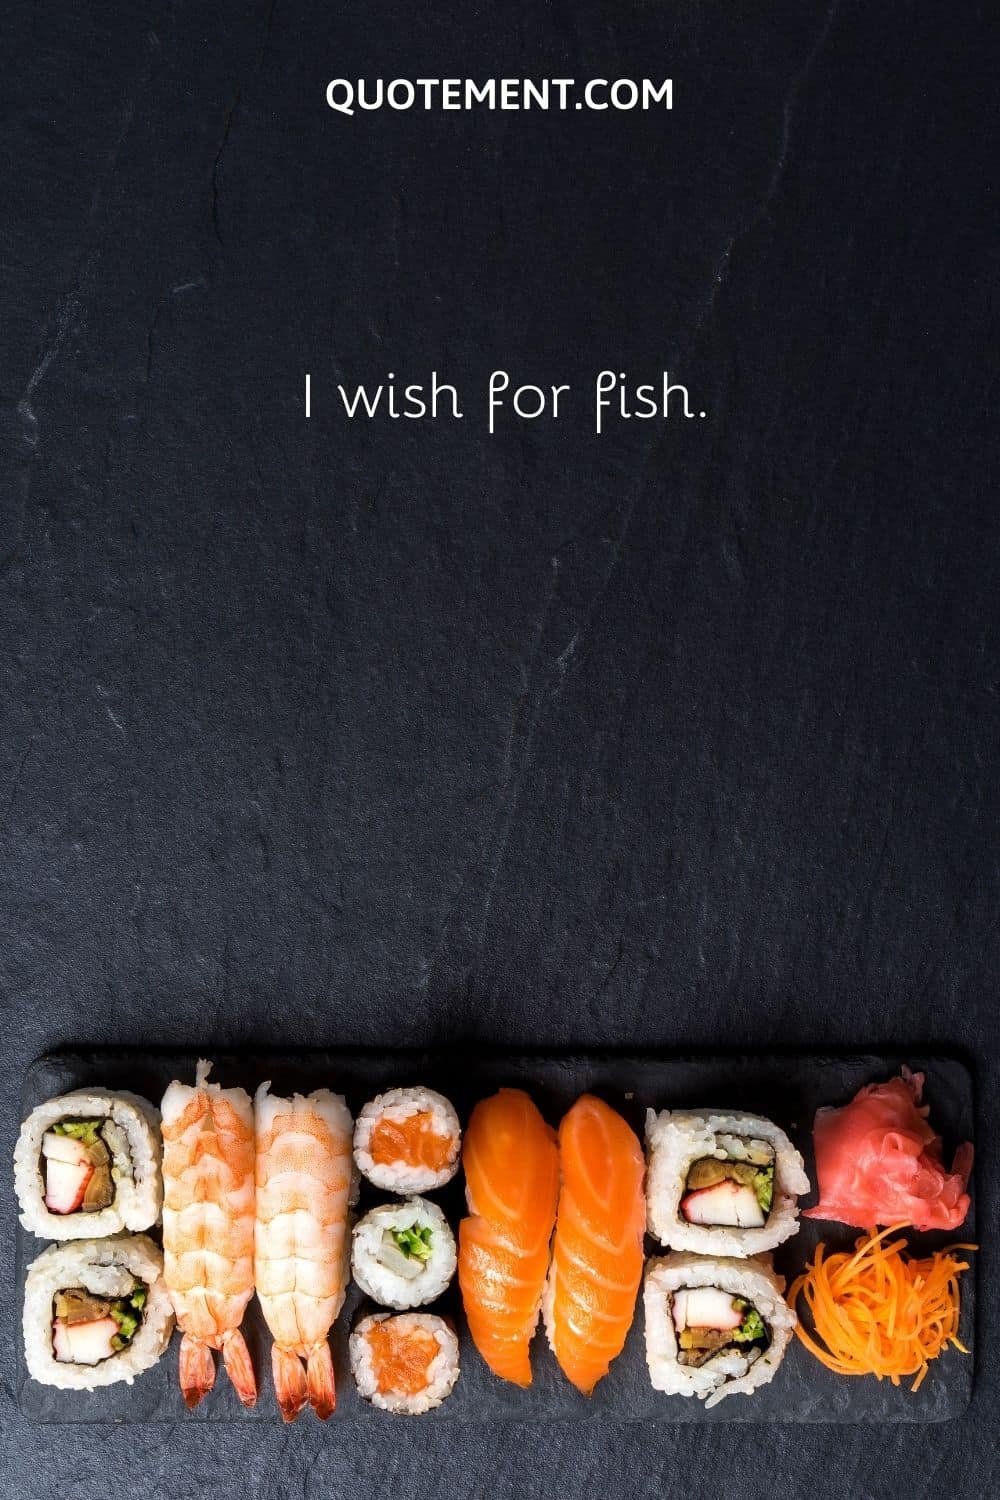 I wish for fish